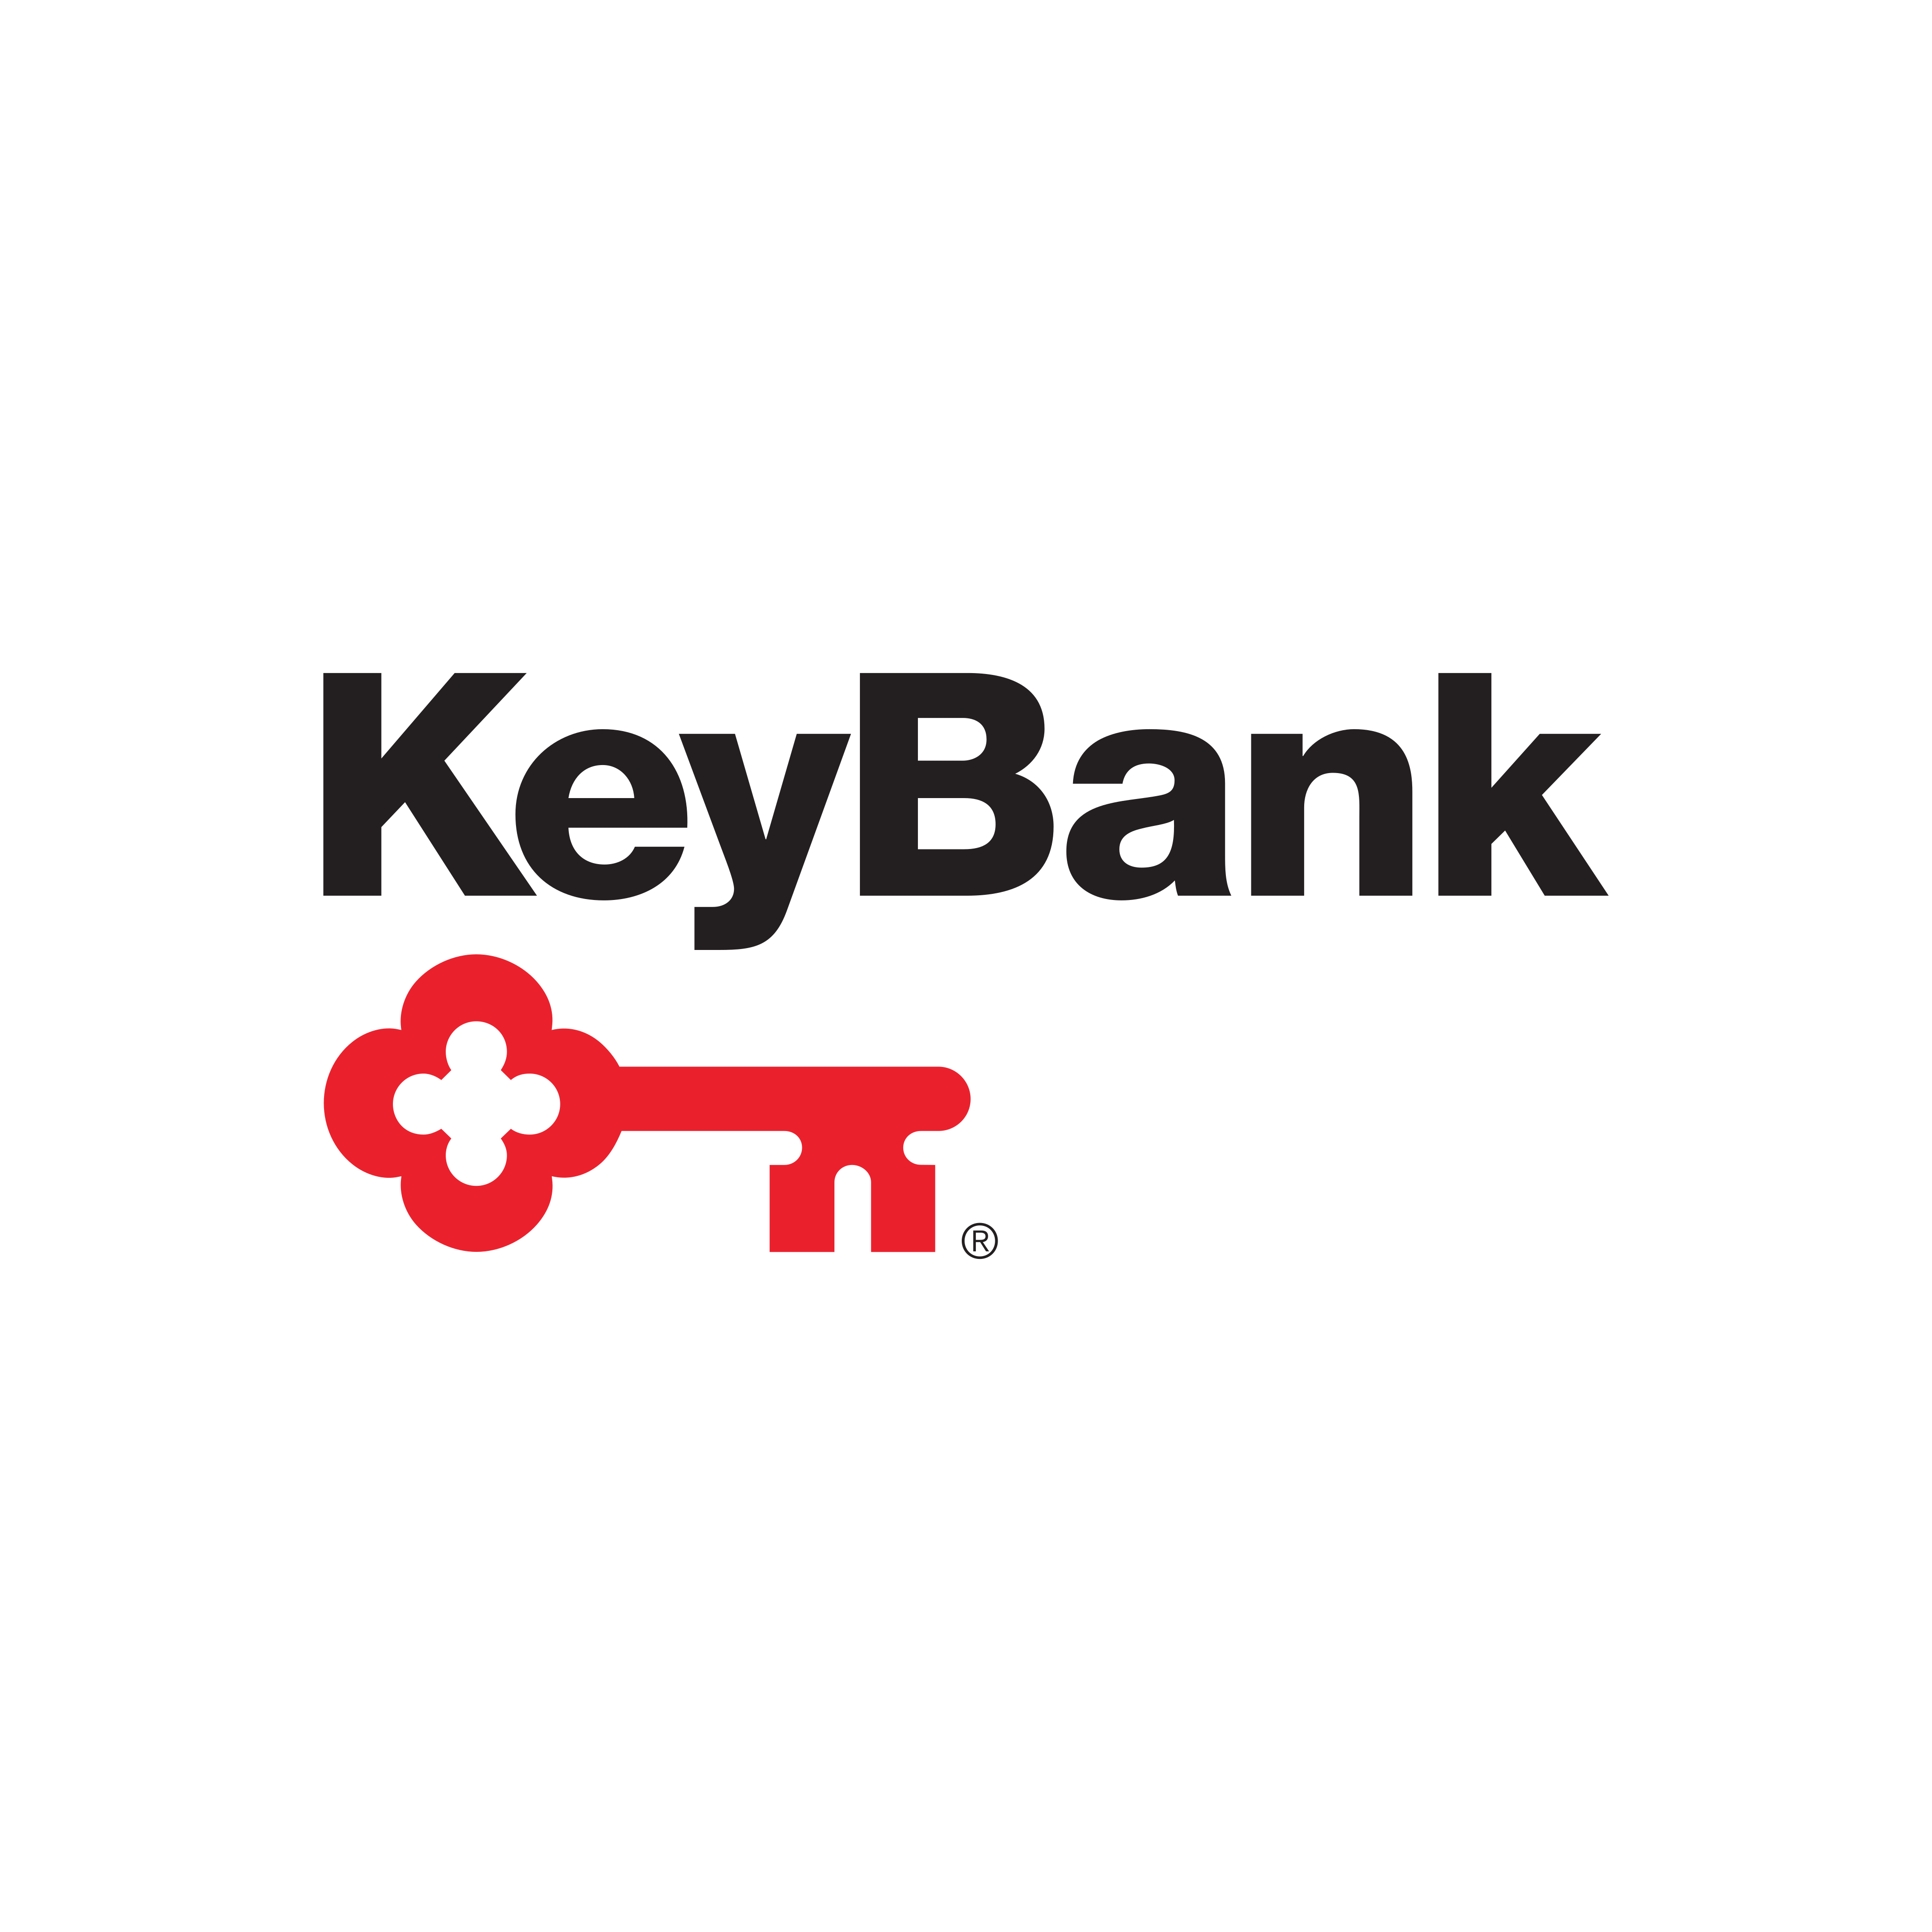 keybank logo 0 - KeyBank Logo